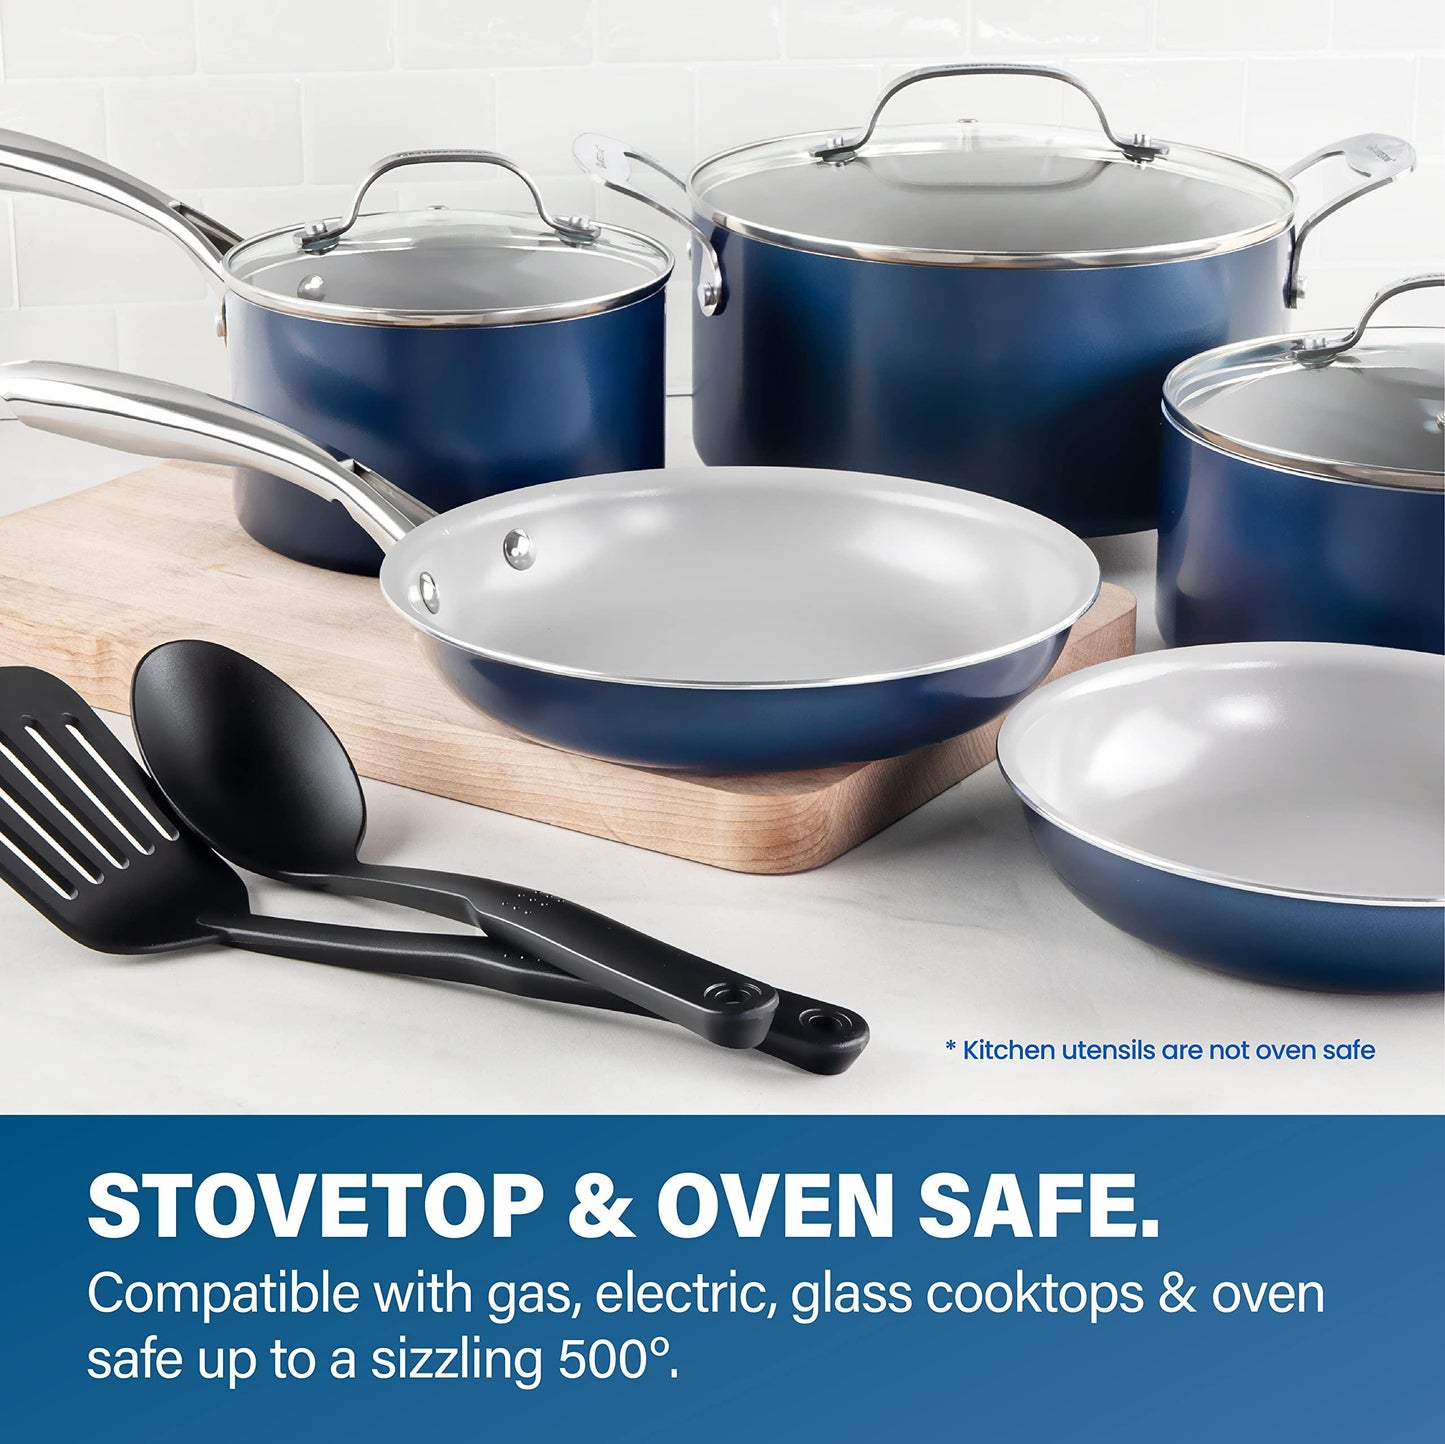 Granitestone Blue 10 Piece Nonstick Cookware Set - Pots, Pans, and Kitchen Sets - Ceramic, Dishwasher Safe - CookCave